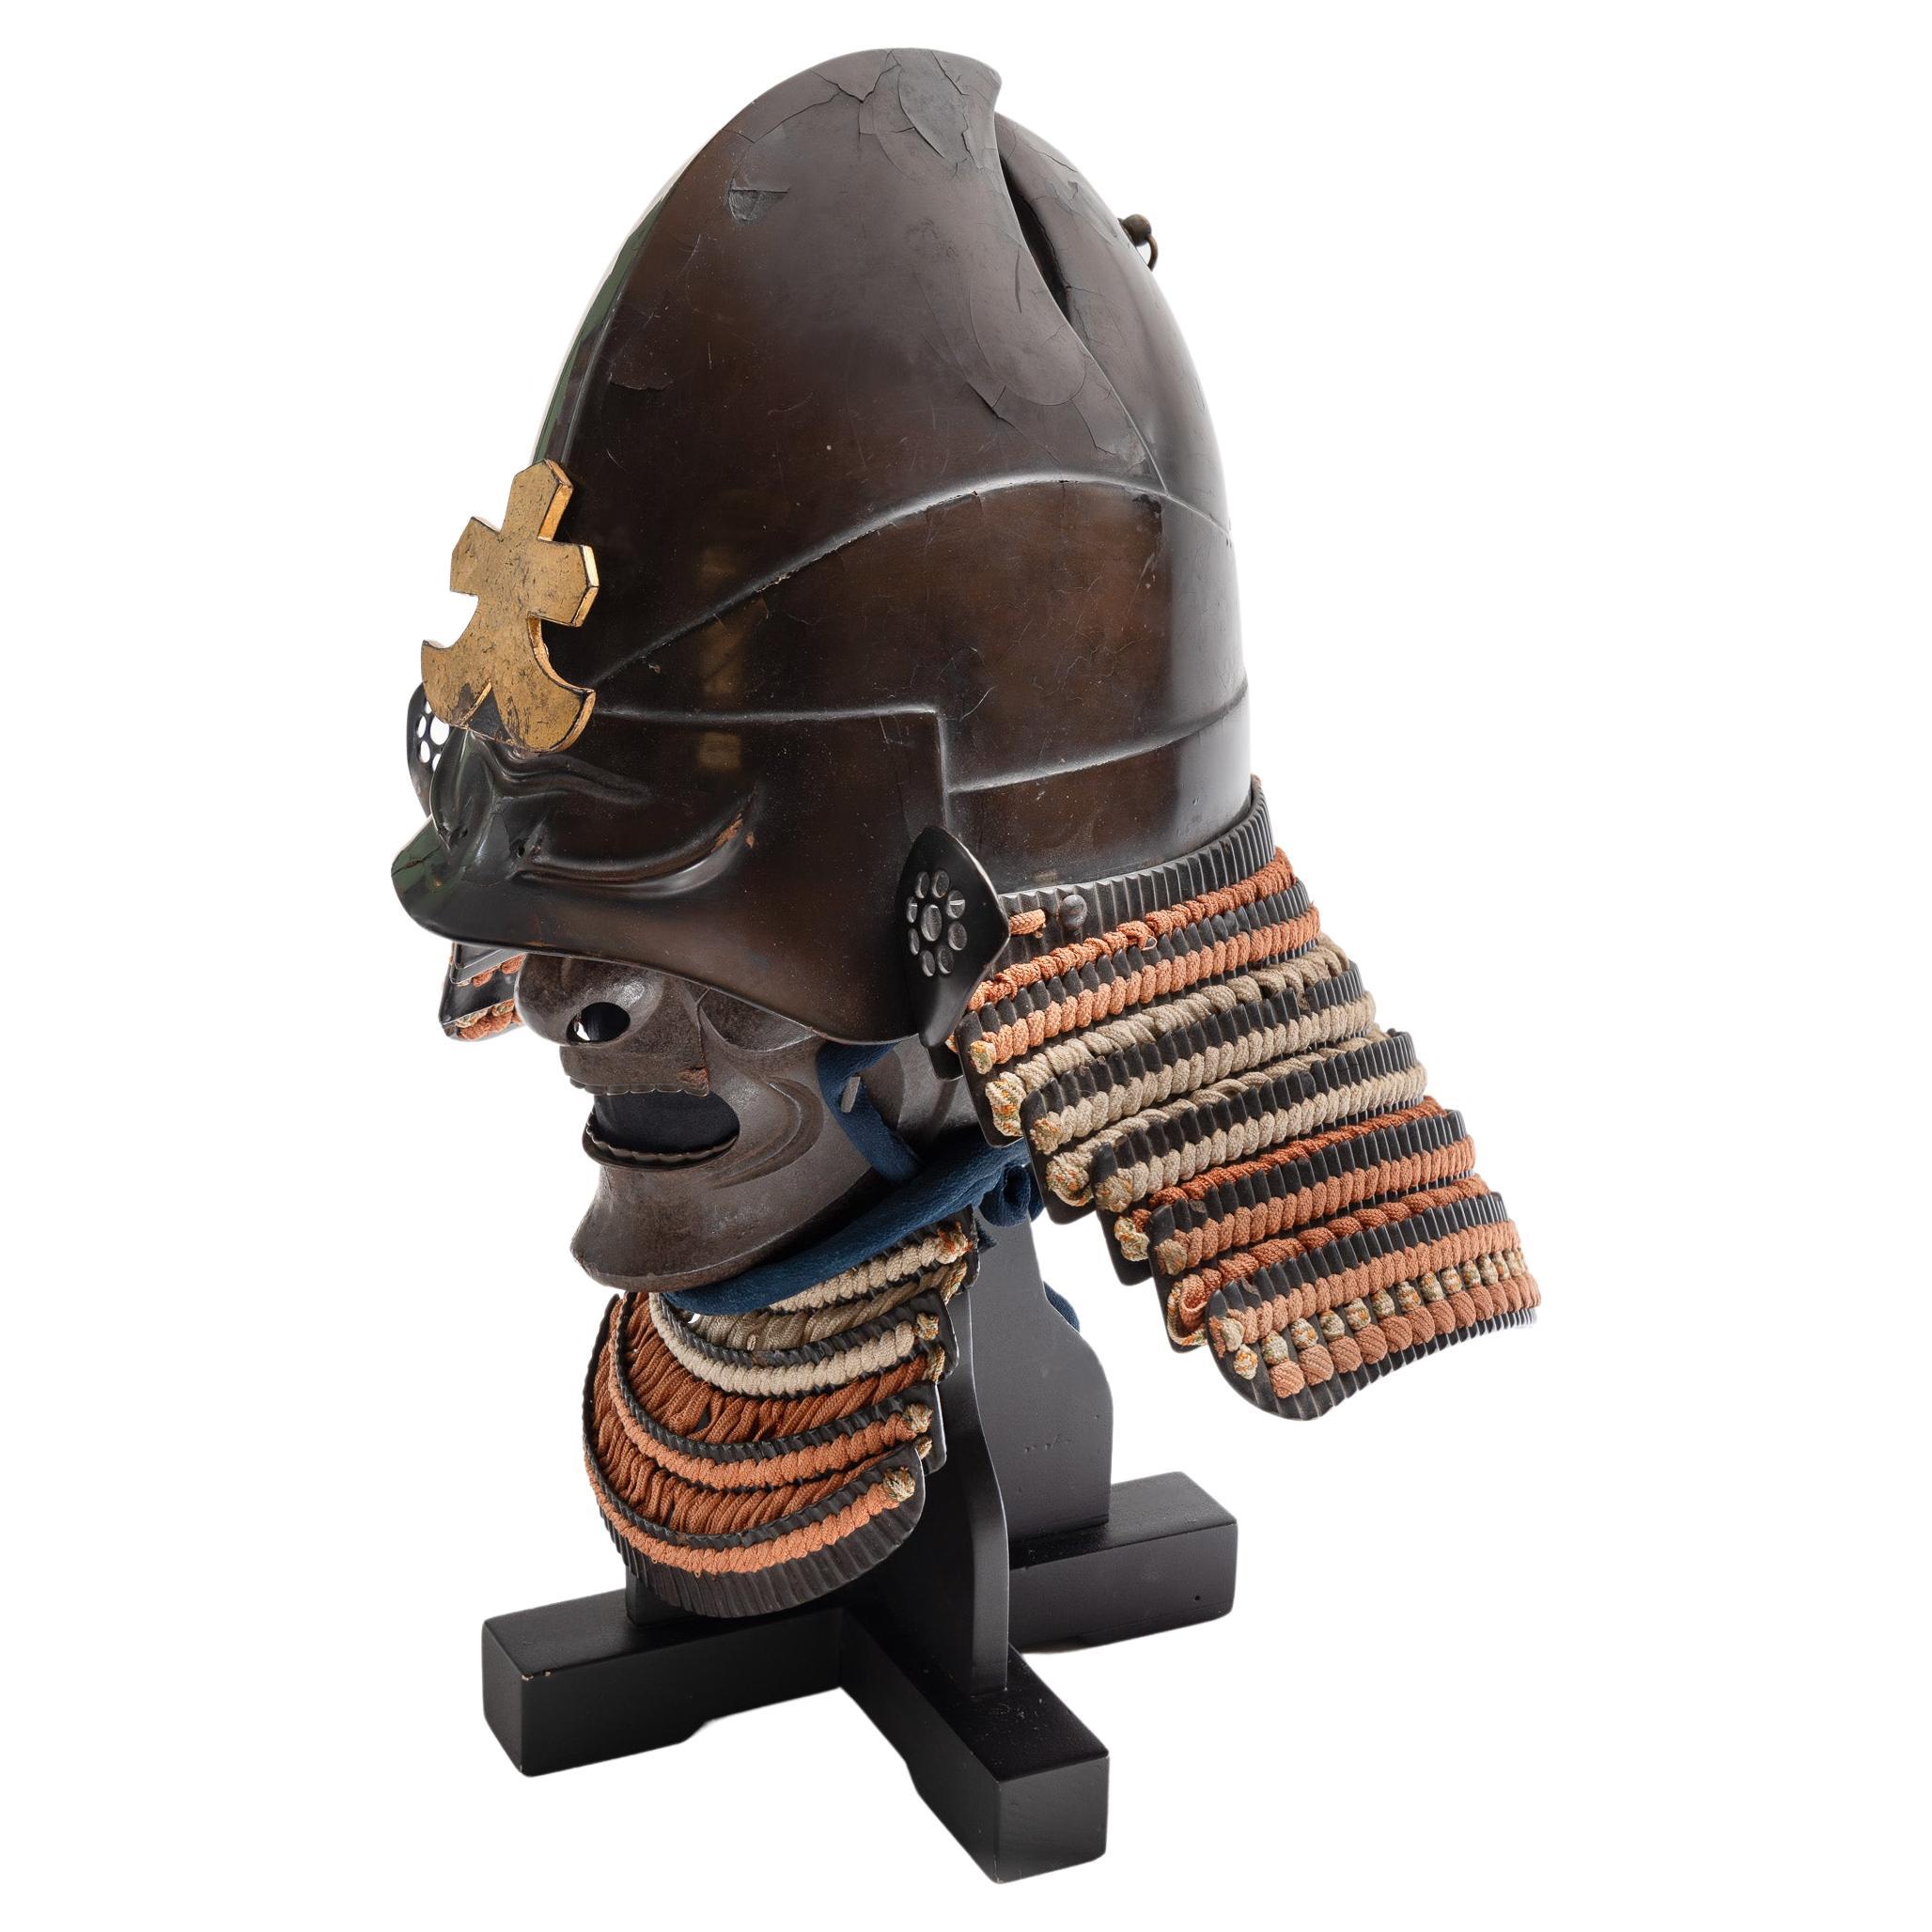 Kani-Nari Kabuto Samurai Helmet Shaped as a Crab’s Claw, 18th Century